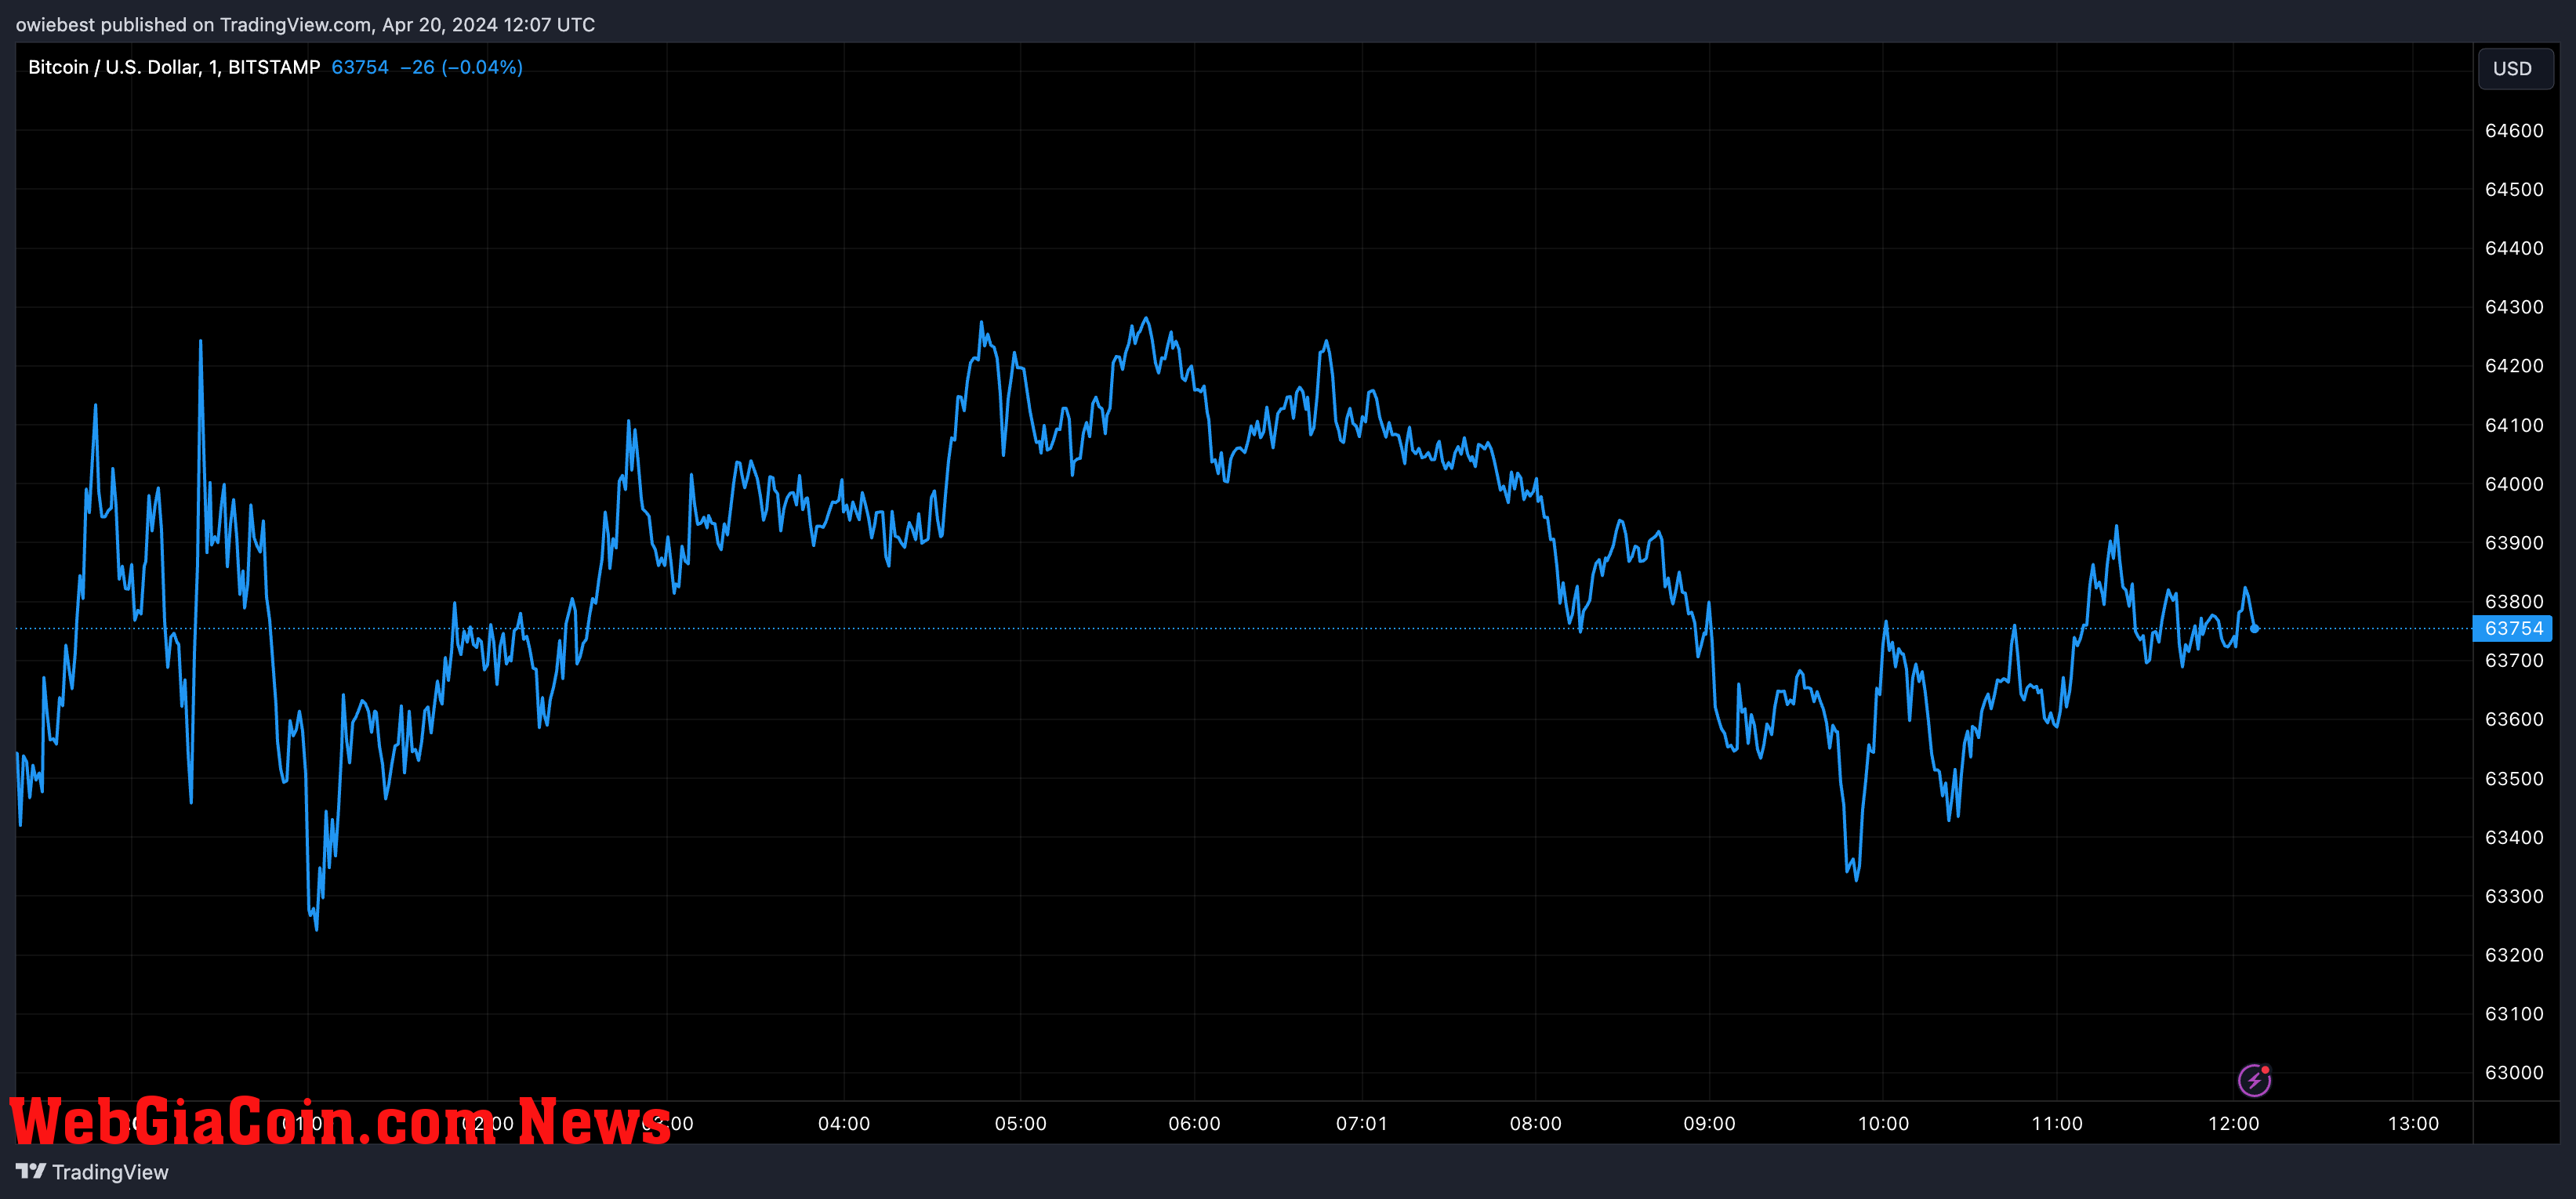 Bitcoin price chart from Tradingview.com (Bitcoin halving)